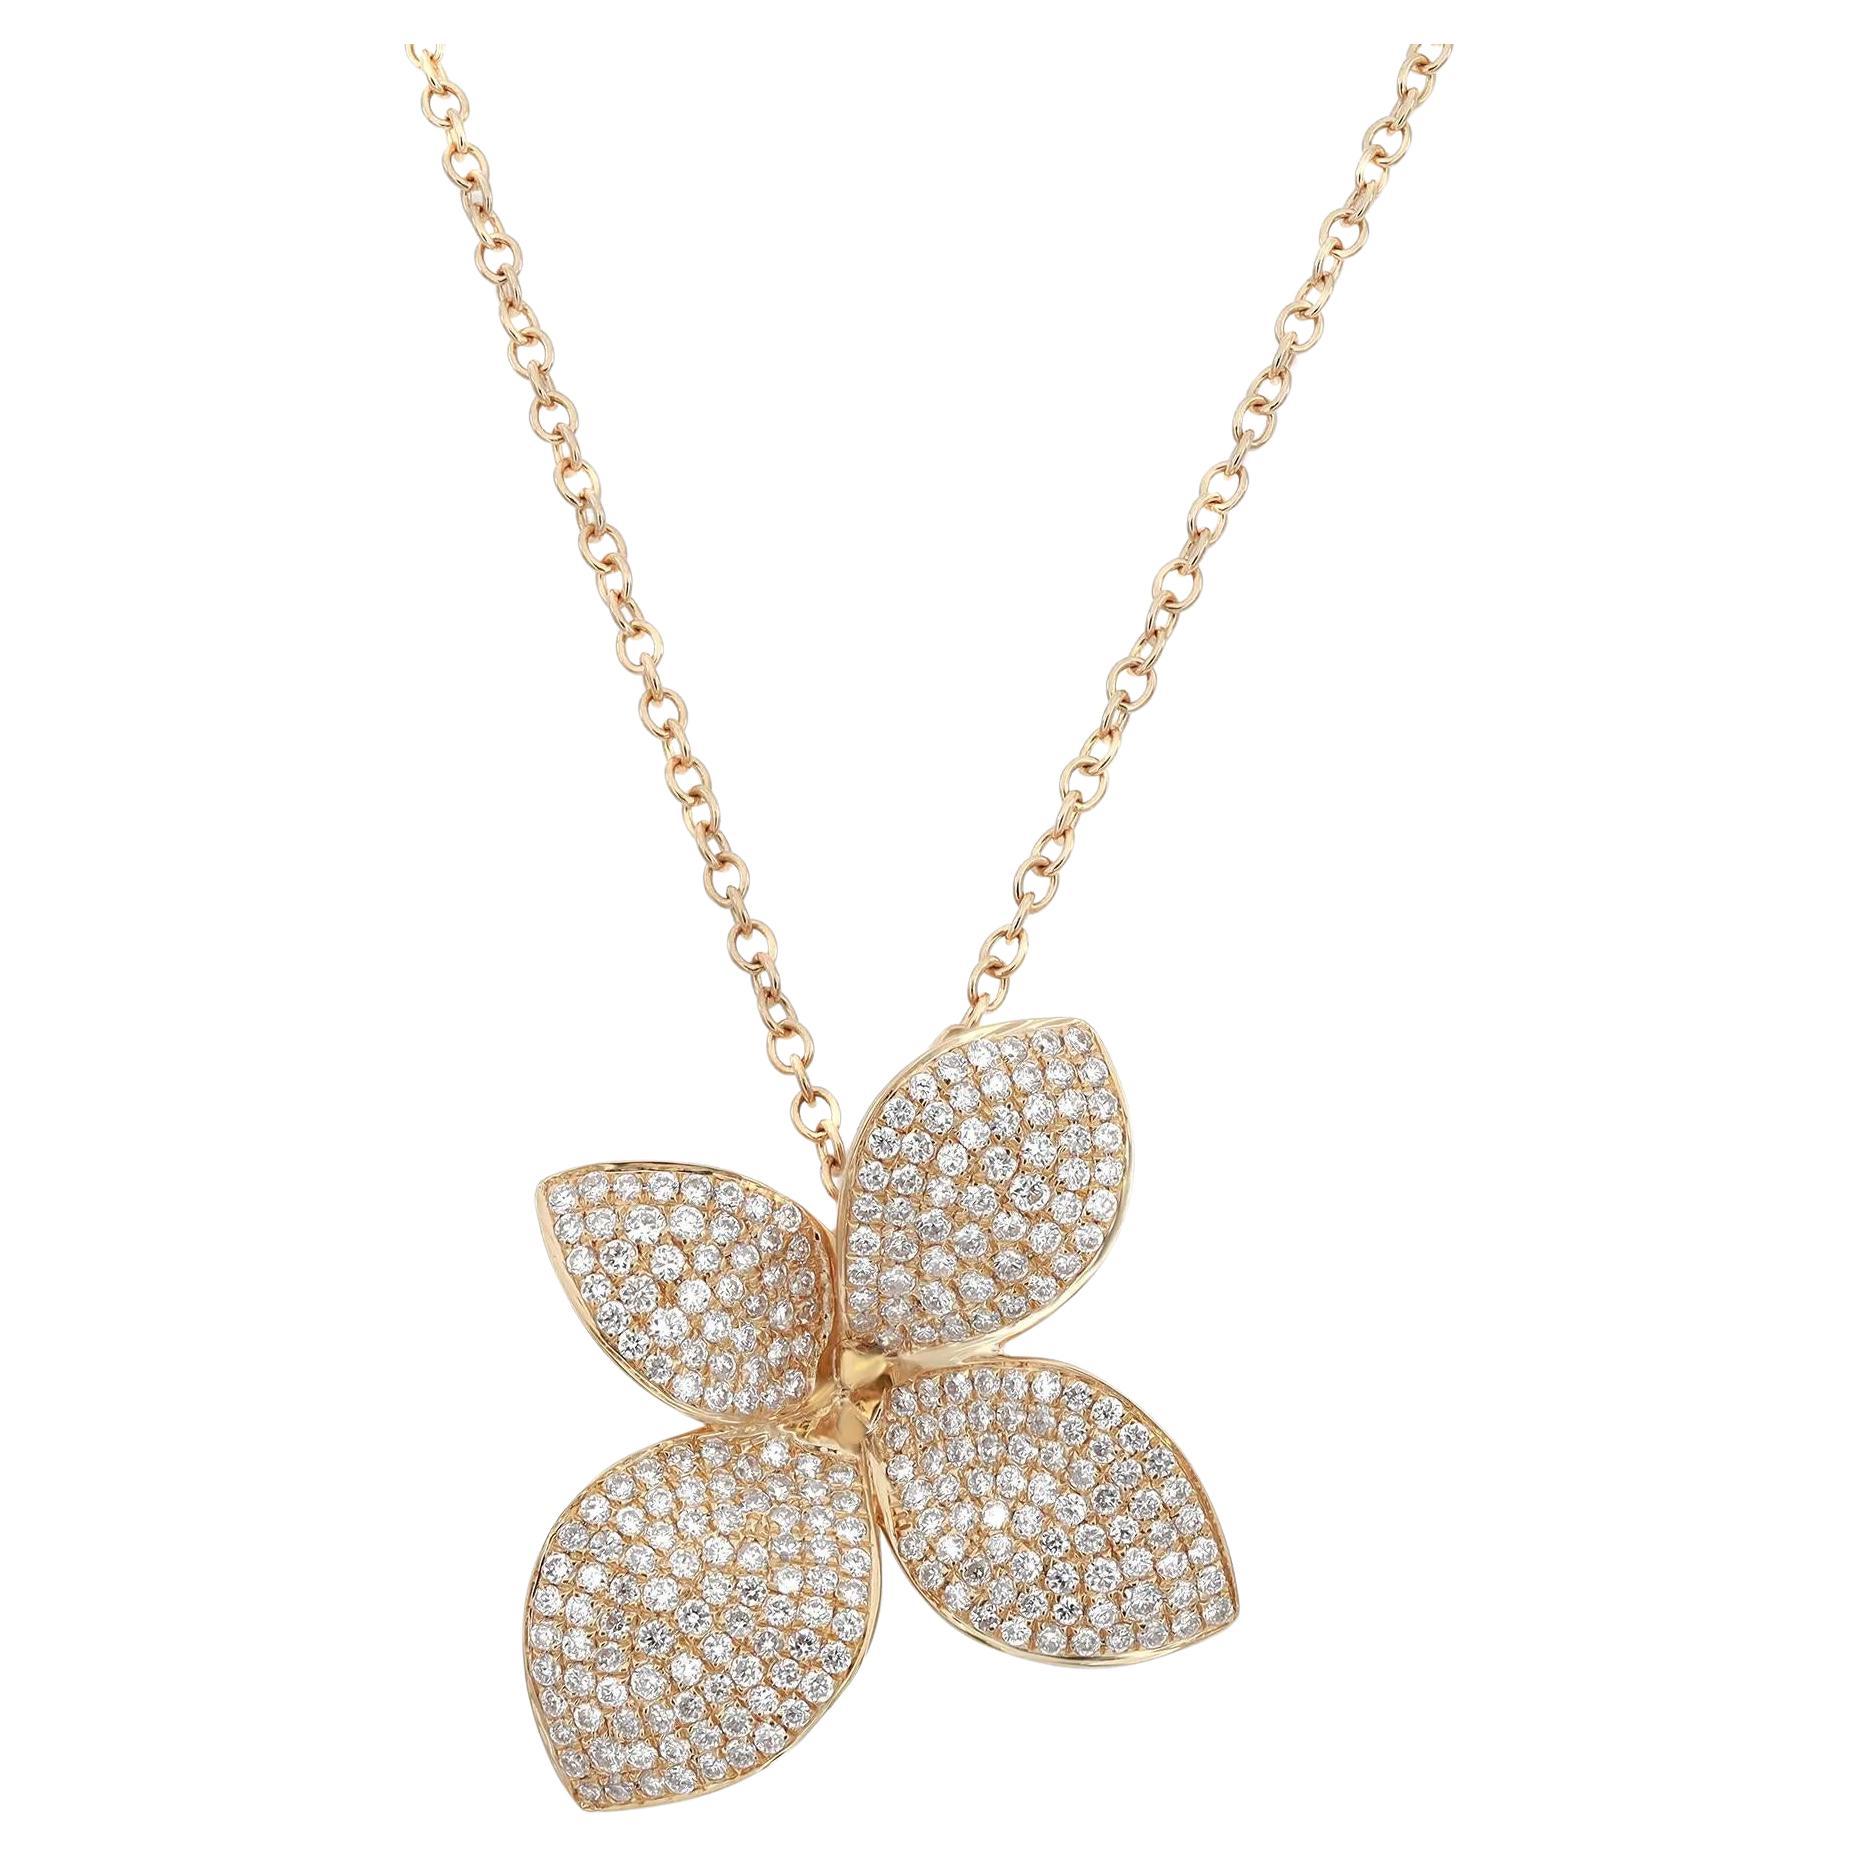 Pave Set Round Cut Diamond Flower Pendant Necklace 18K Yellow Gold 1.07Cttw For Sale